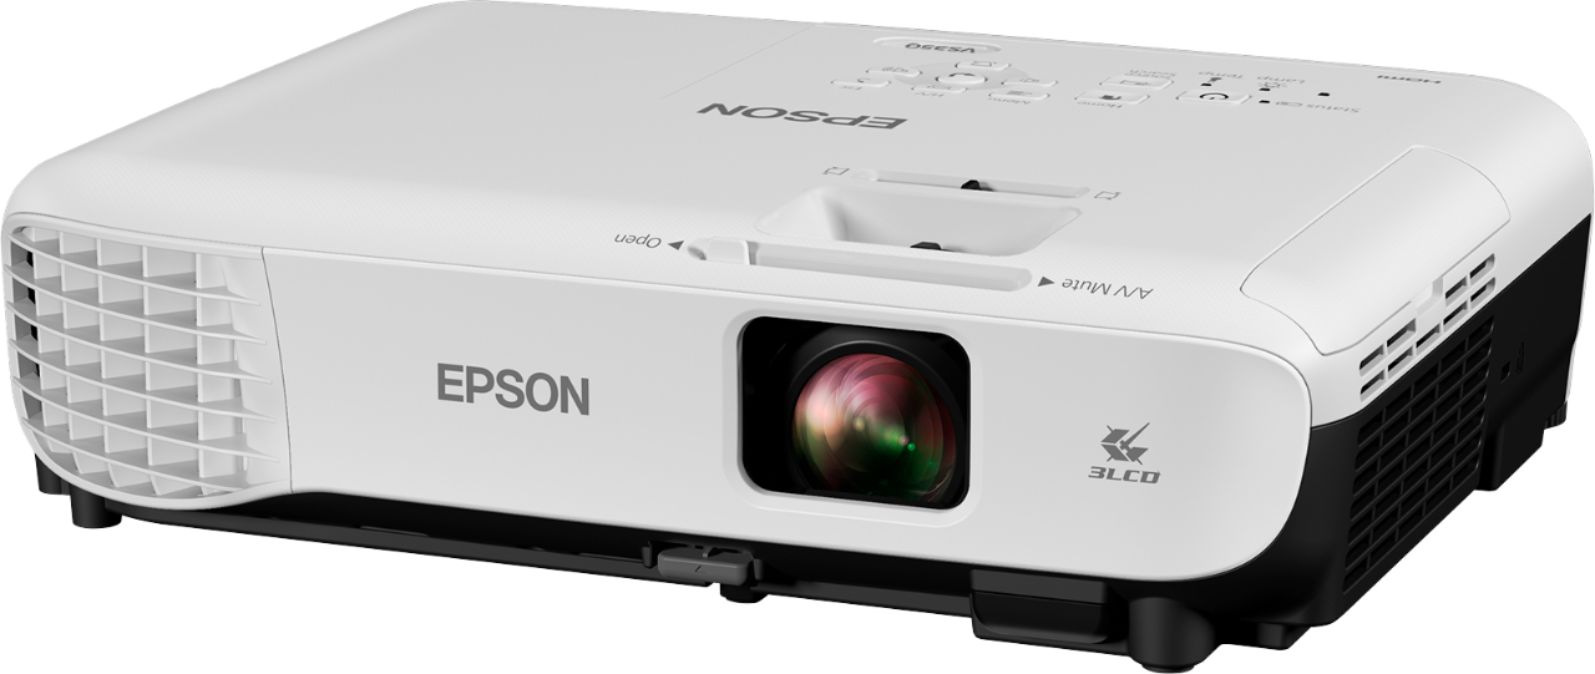 Left View: Epson - VS350 XGA 3LCD Projector - White